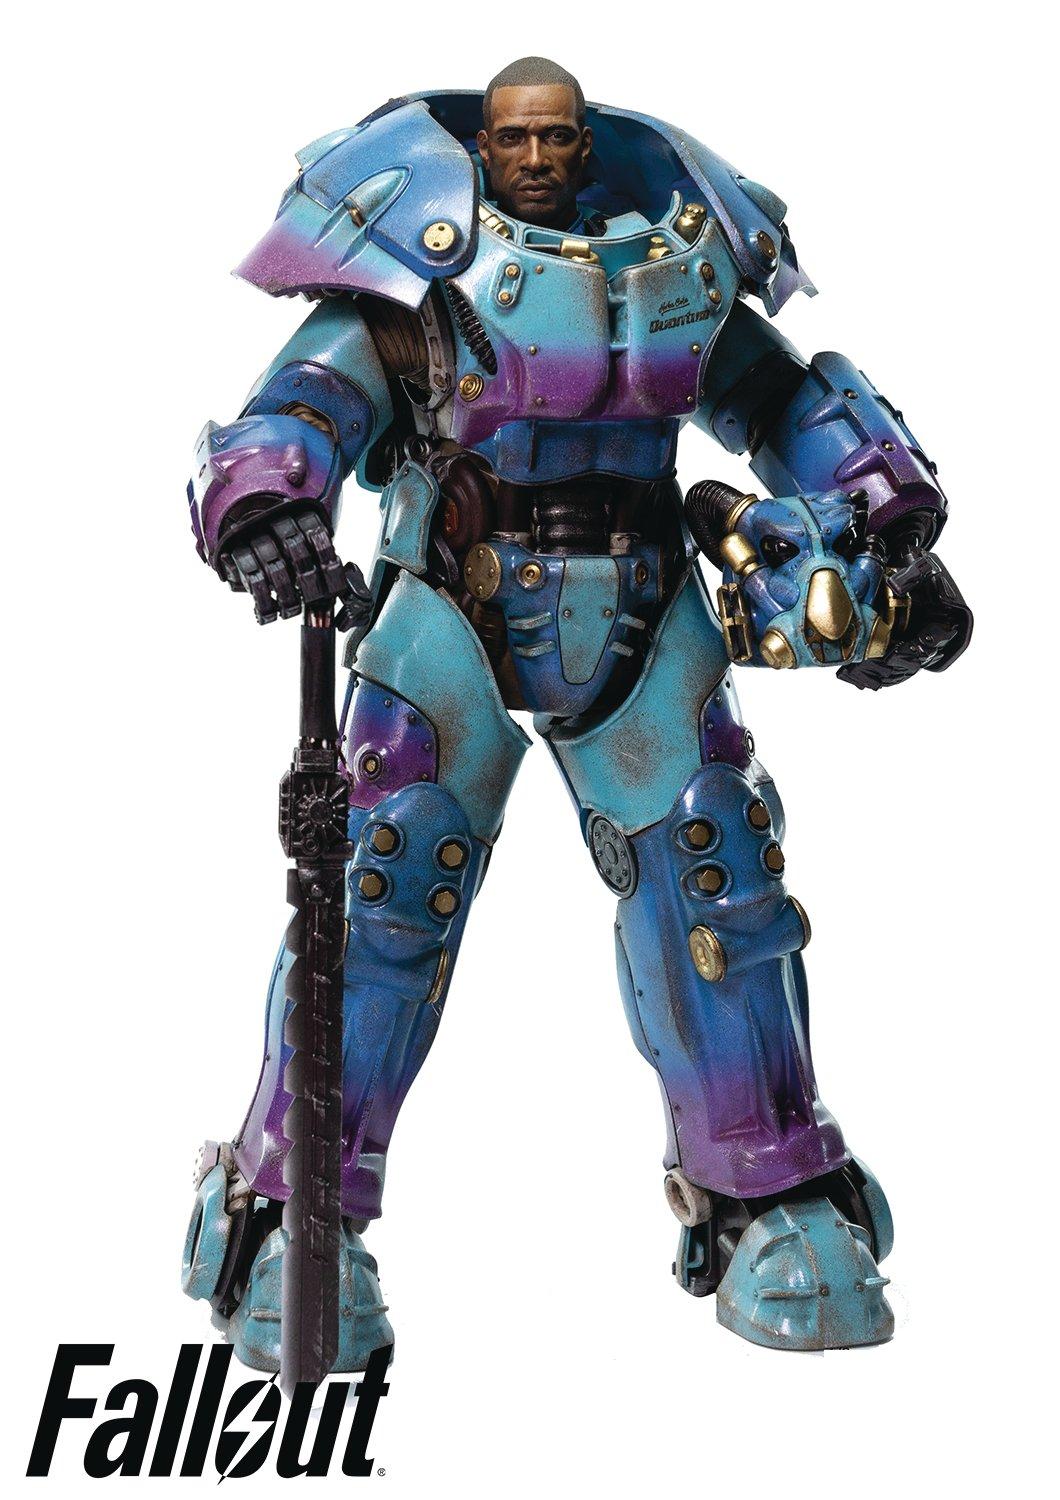 x01 power armor figure